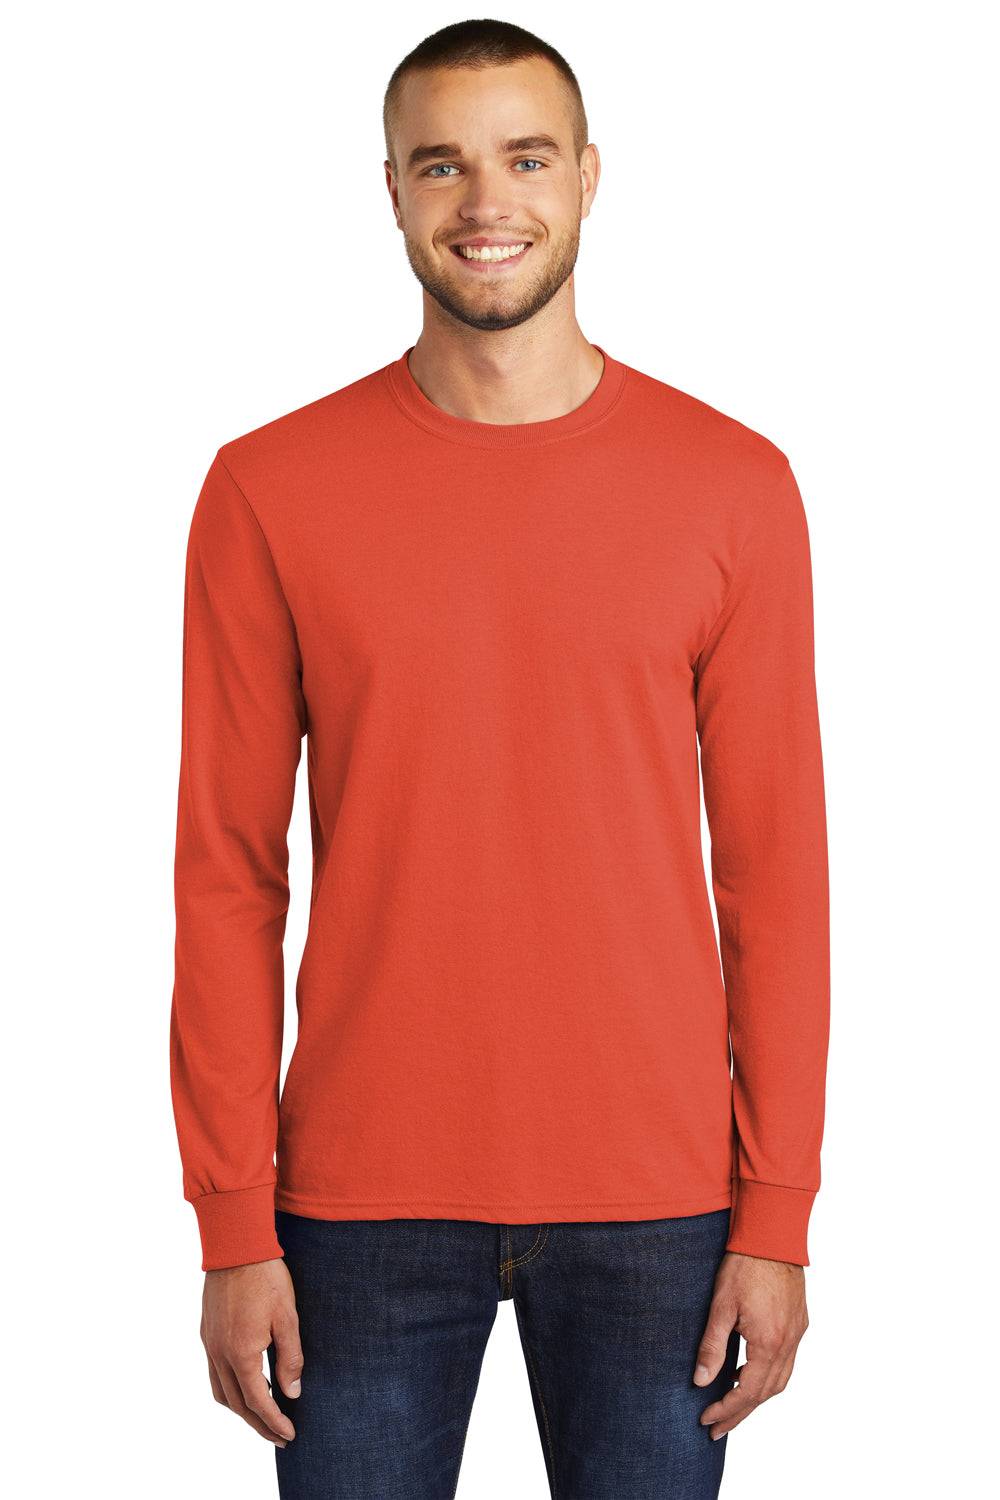 Port & Company PC55LS Mens Core Long Sleeve Crewneck T-Shirt Orange Front